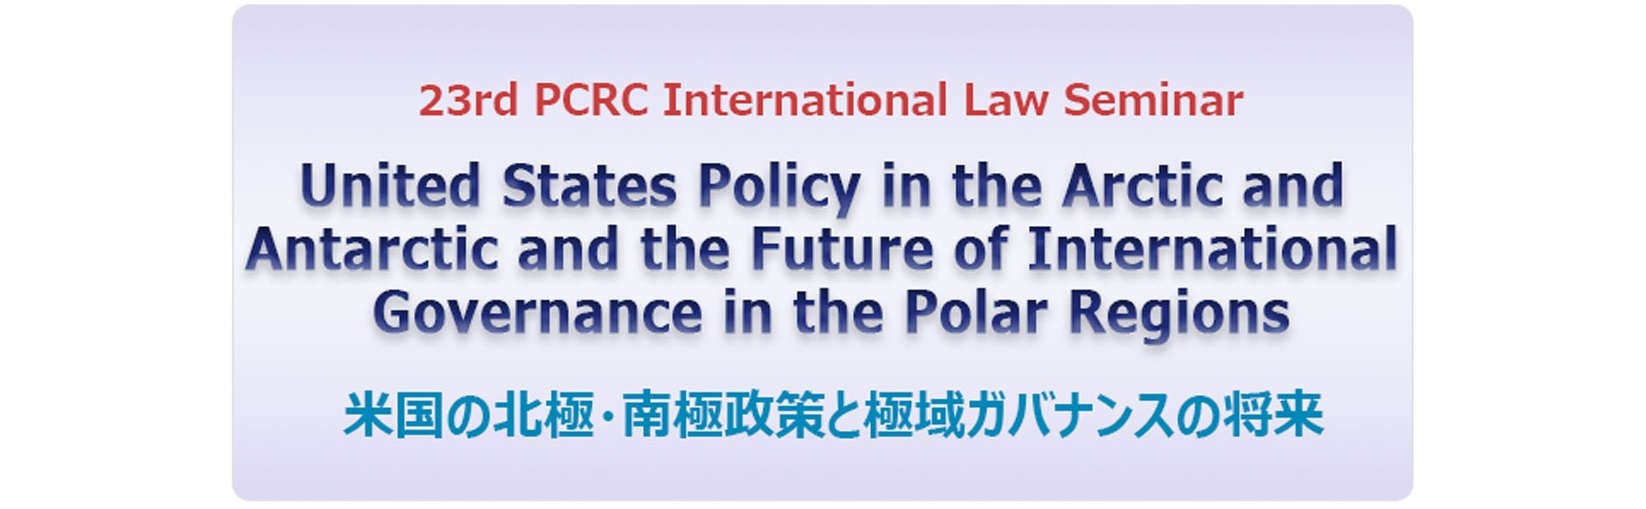 23rd PCRC International Law Seminar title